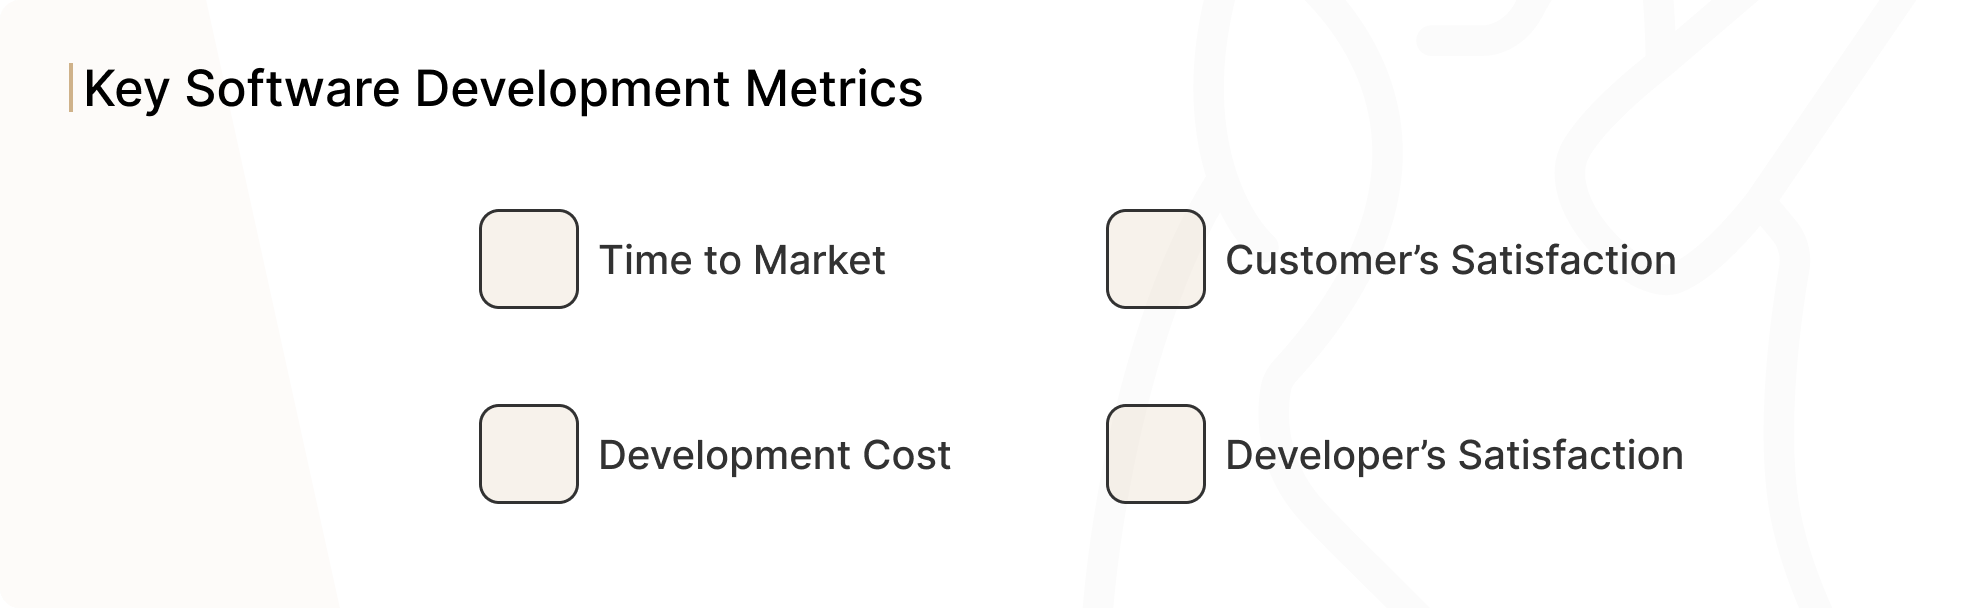 Key Software Development Metrics